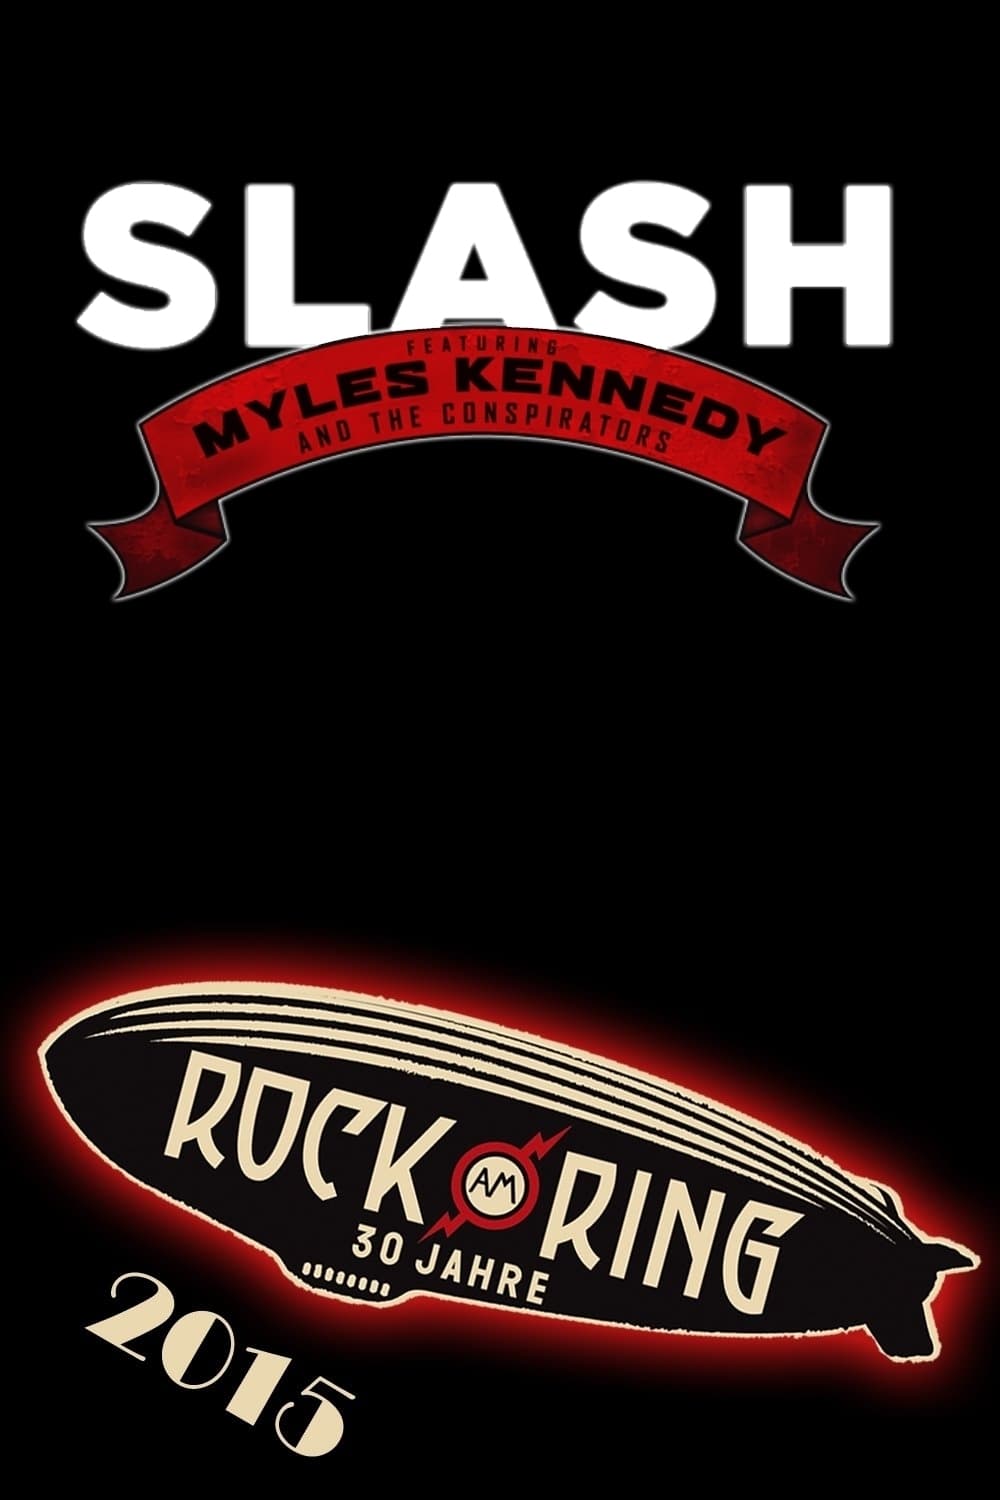 Slash feat. Myles Kennedy & The Conspirators - Rock am Ring 2015